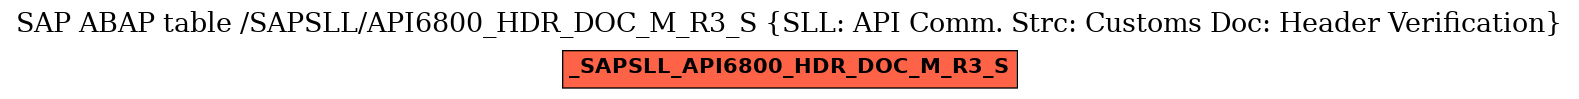 E-R Diagram for table /SAPSLL/API6800_HDR_DOC_M_R3_S (SLL: API Comm. Strc: Customs Doc: Header Verification)